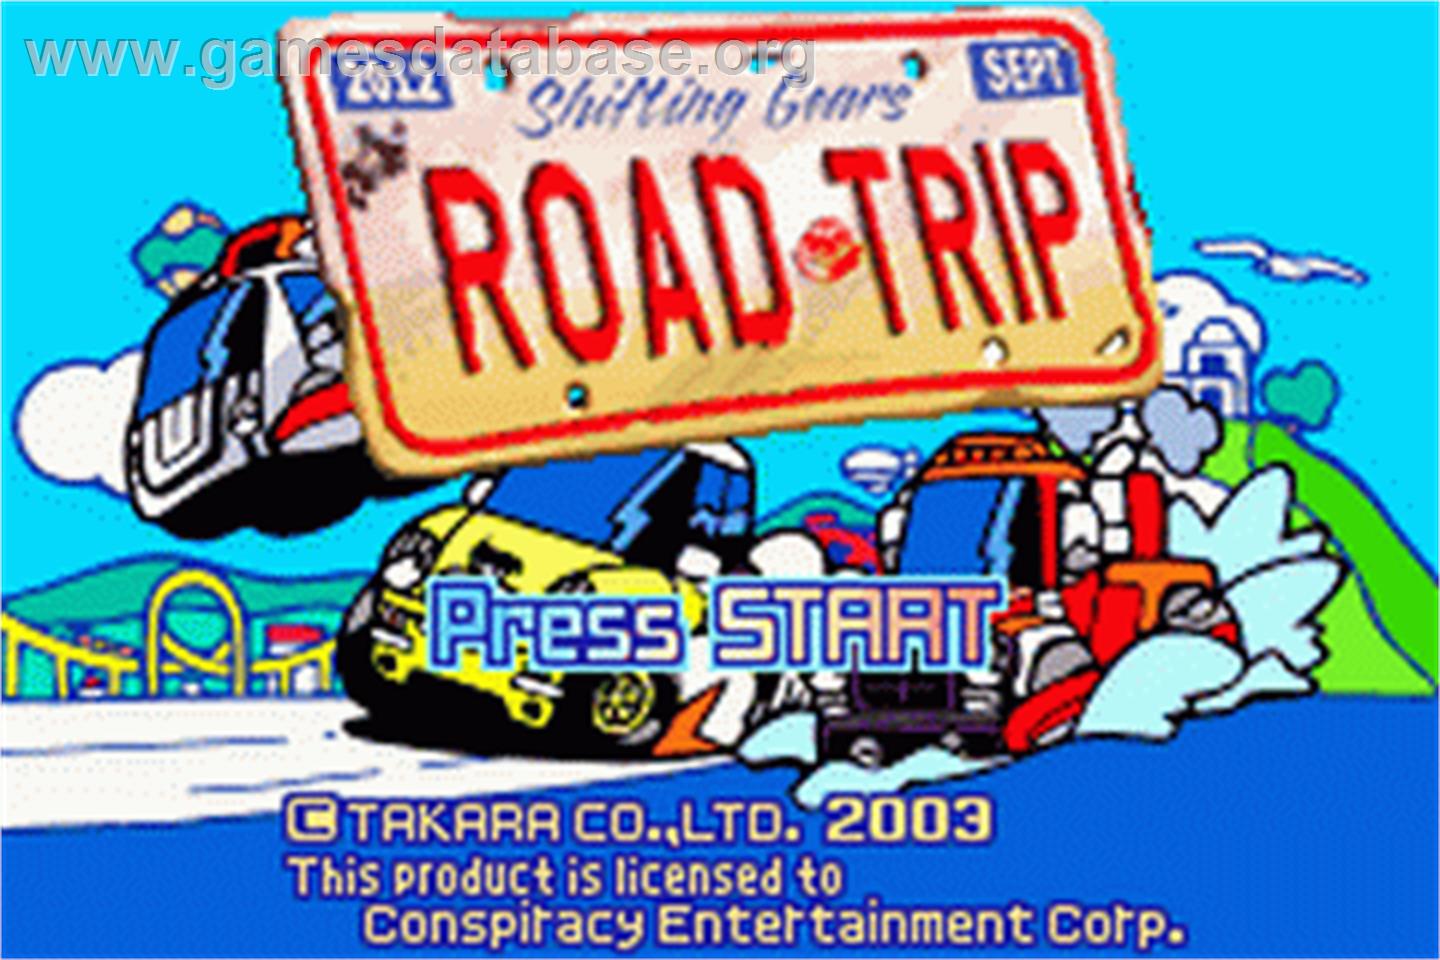 Road Trip: Shifting Gears - Nintendo Game Boy Advance - Artwork - Title Screen